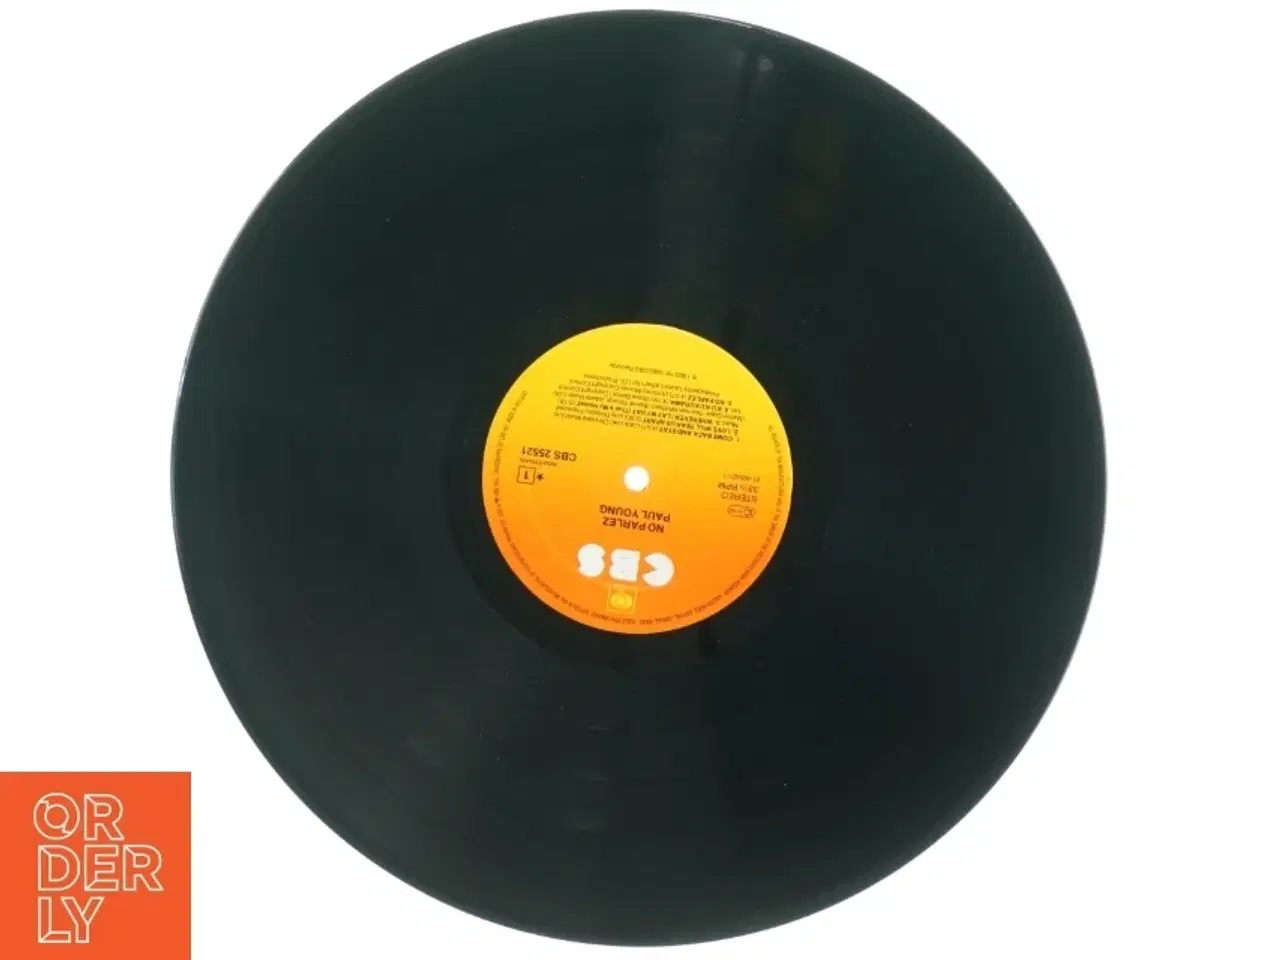 Billede 4 - Paul Young - No Parlez LP vinylplade fra CBS (str. 31 x 31 cm)